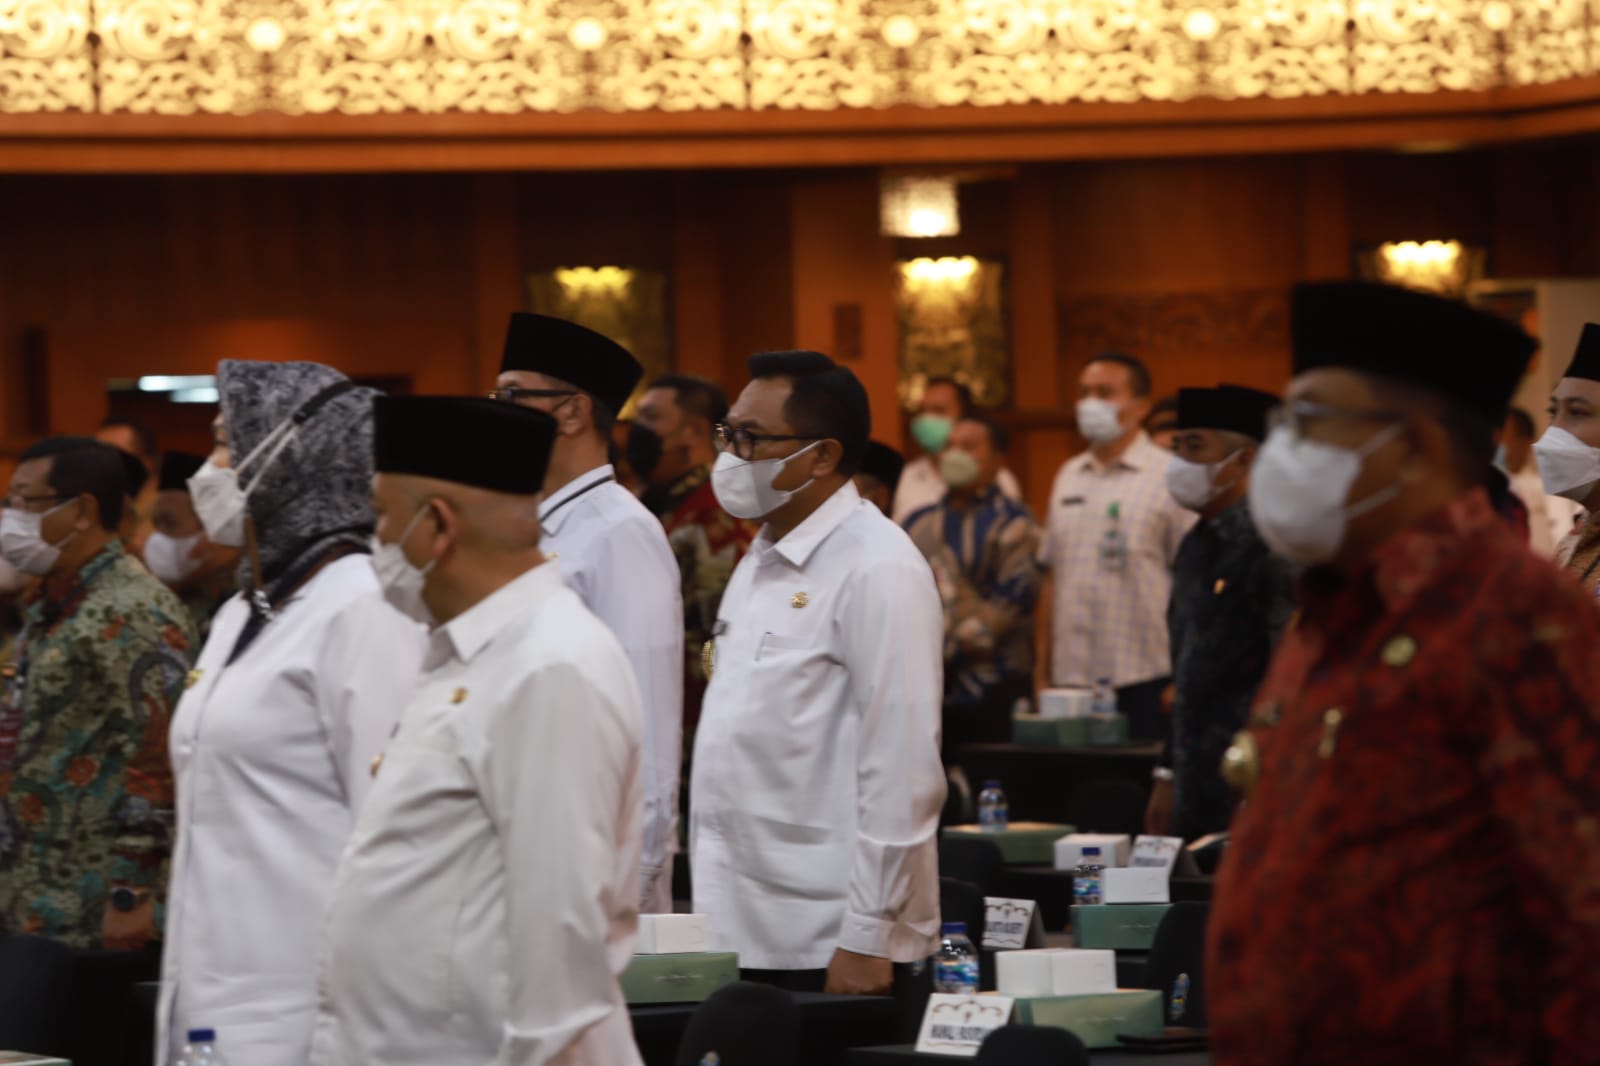 Wagub Jatim Ingatkan Seluruh Kepala Daerah Implementasikan MCP